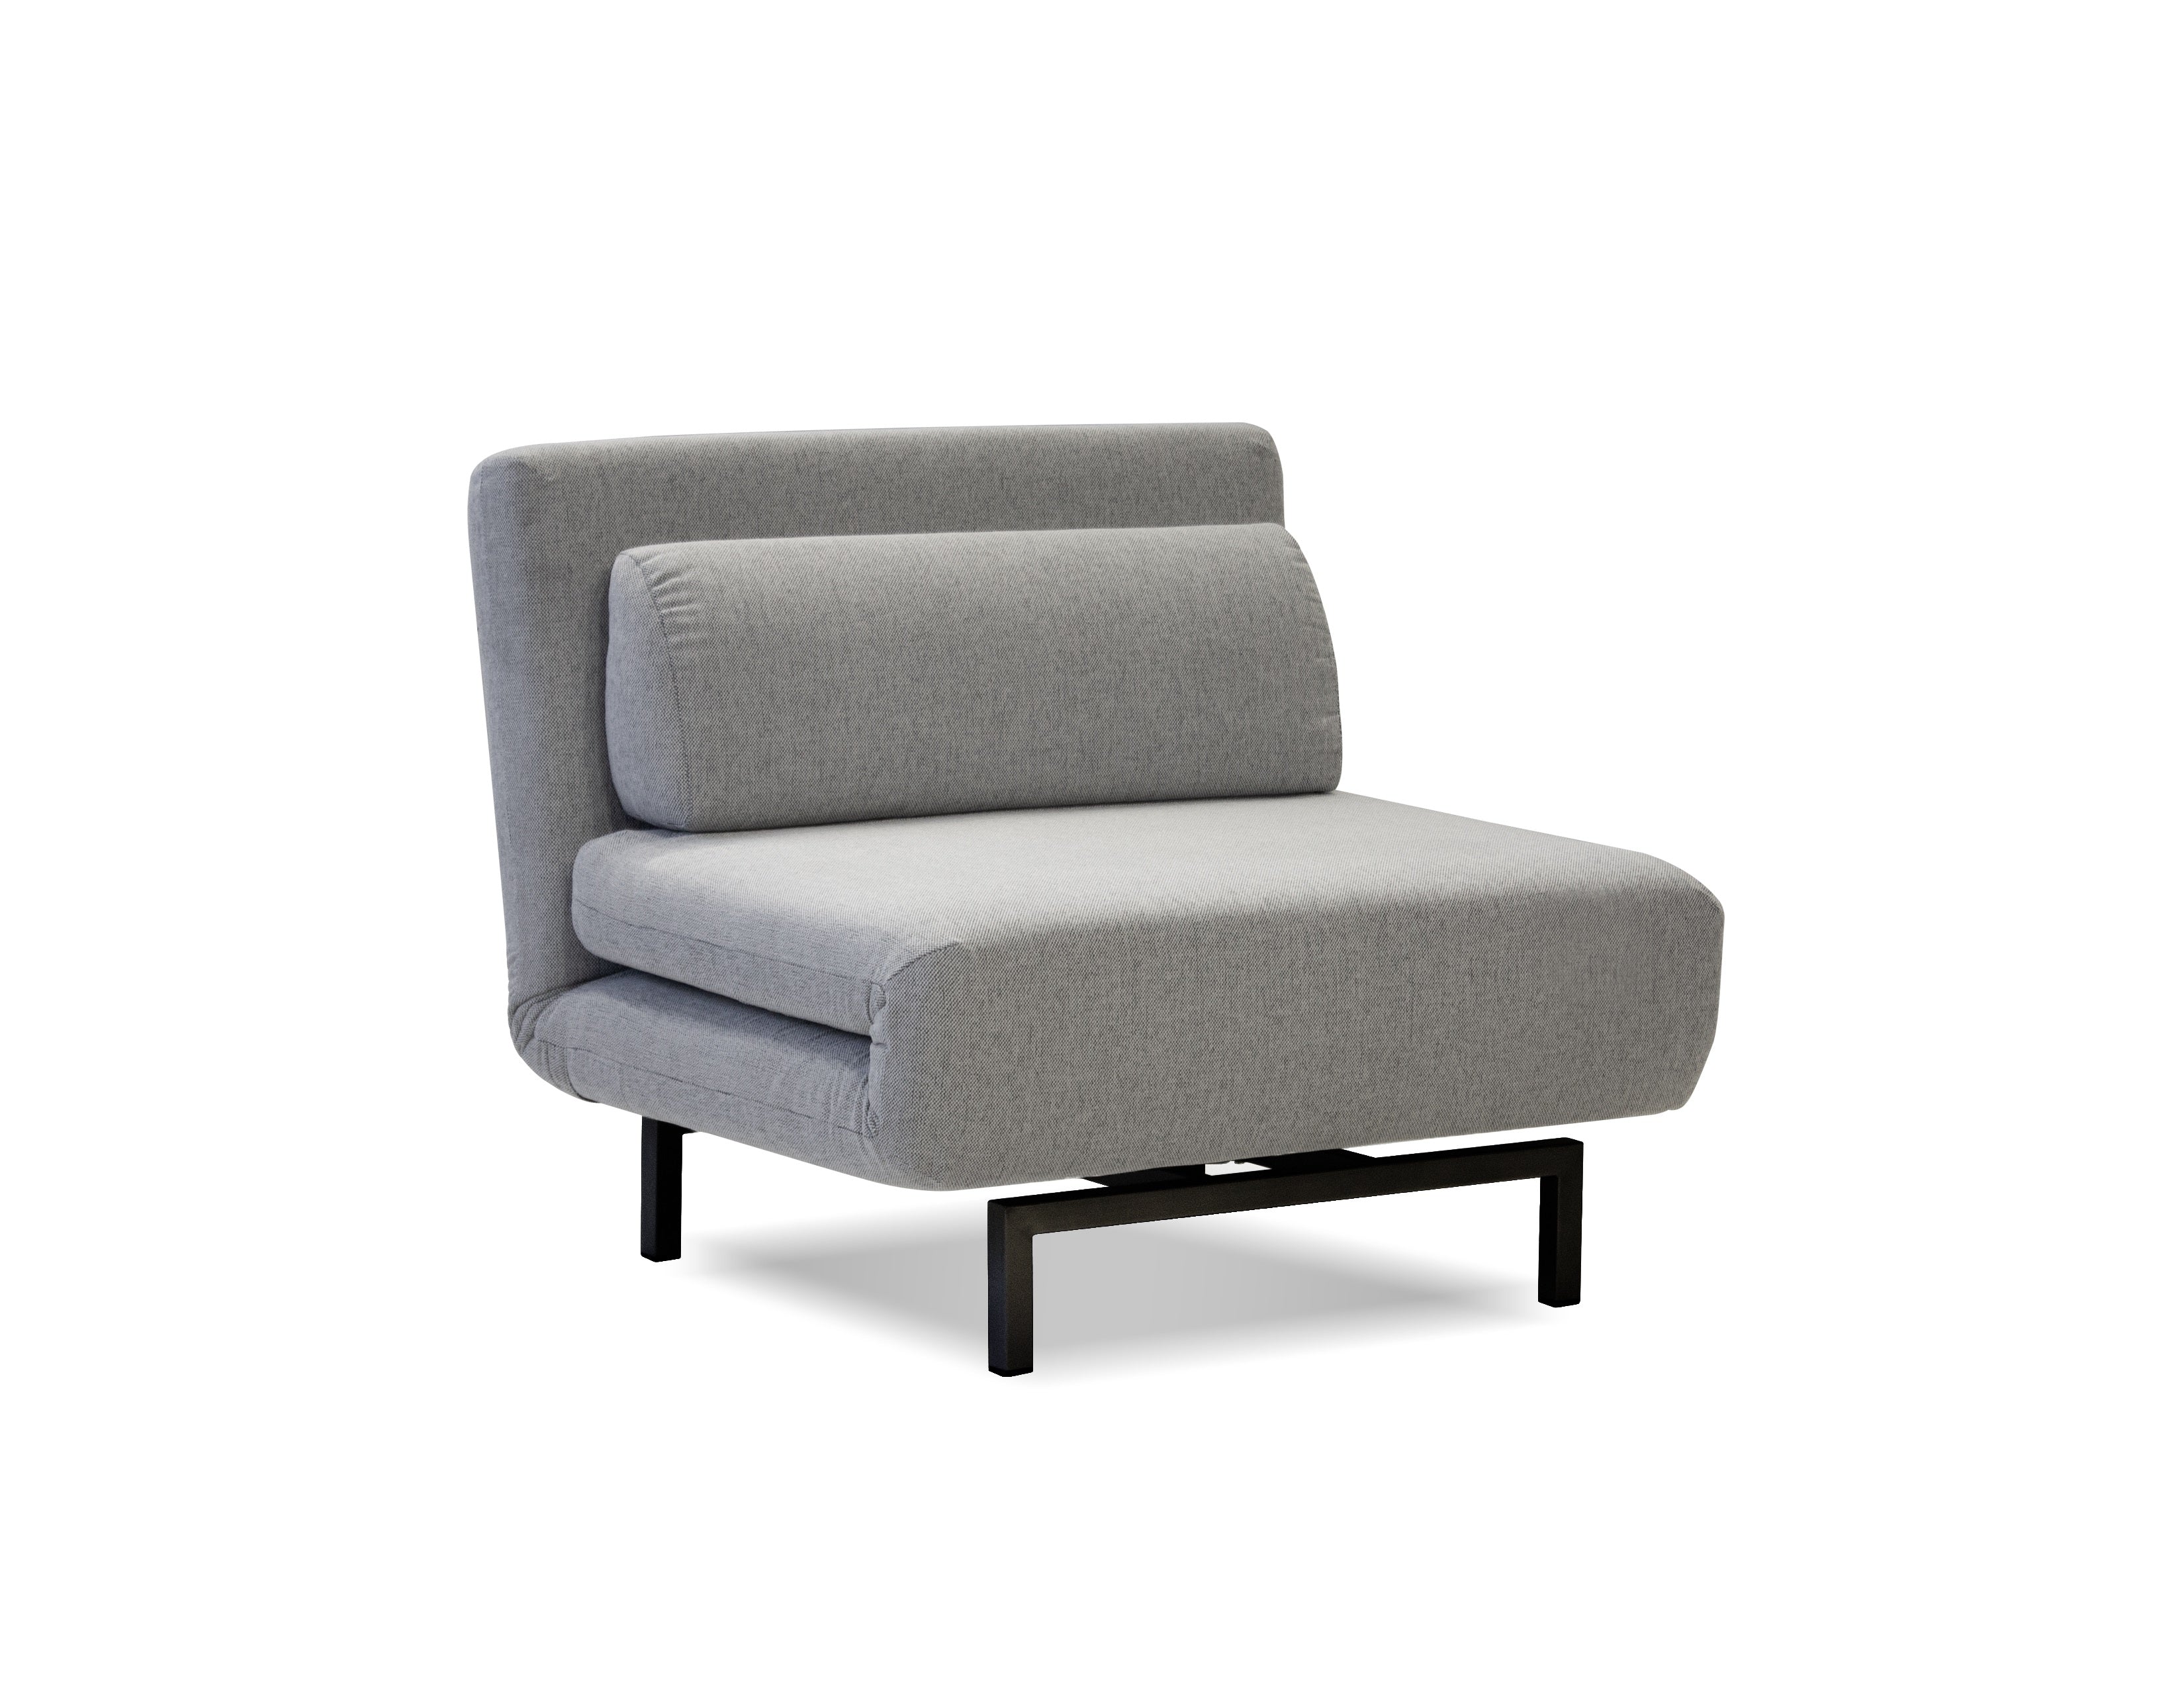 Swivo Motion Sleeper Chair - Light Grey/Silver